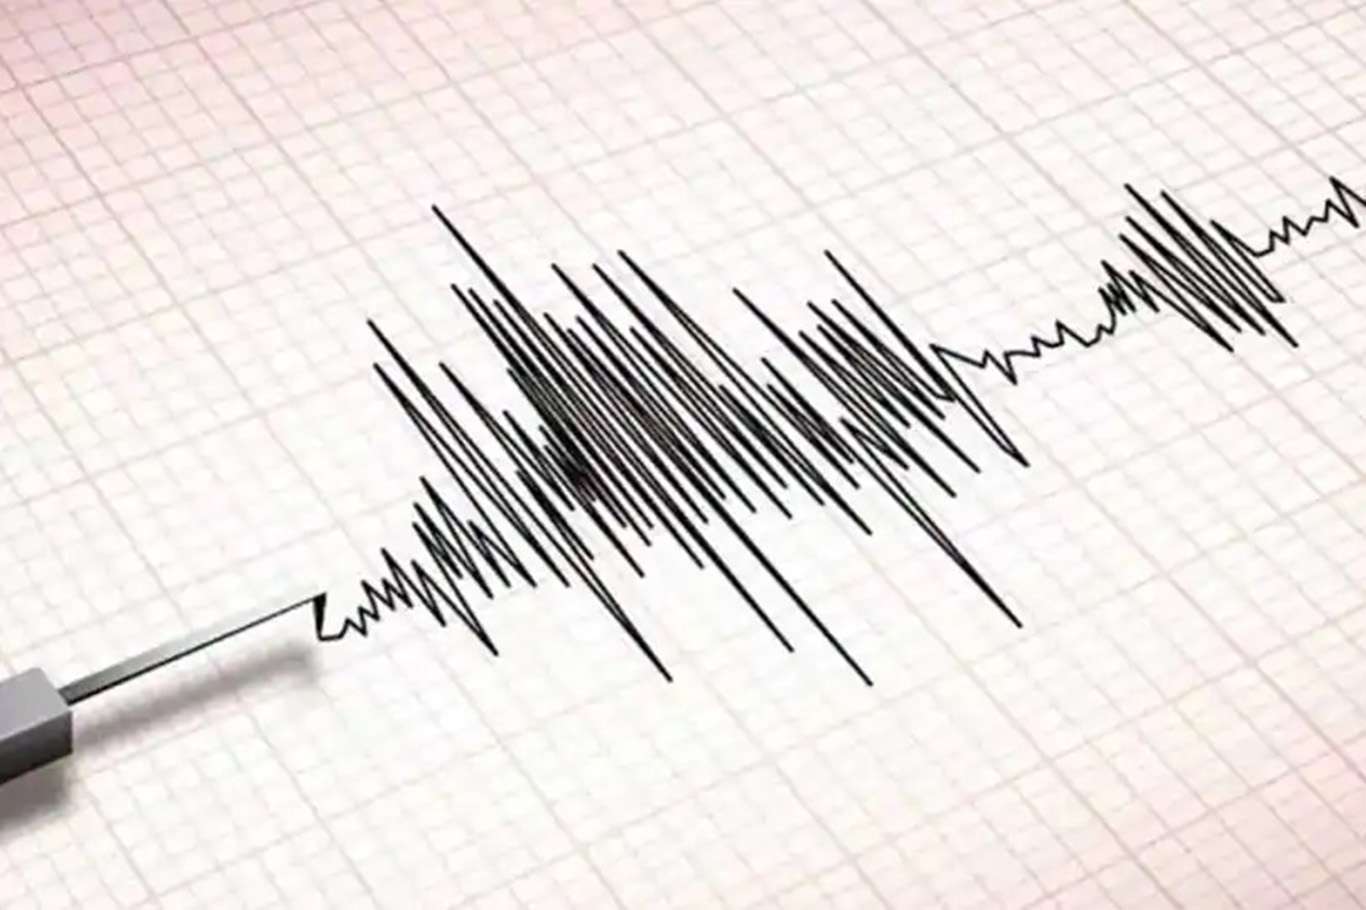 Avustralya da korkutan deprem